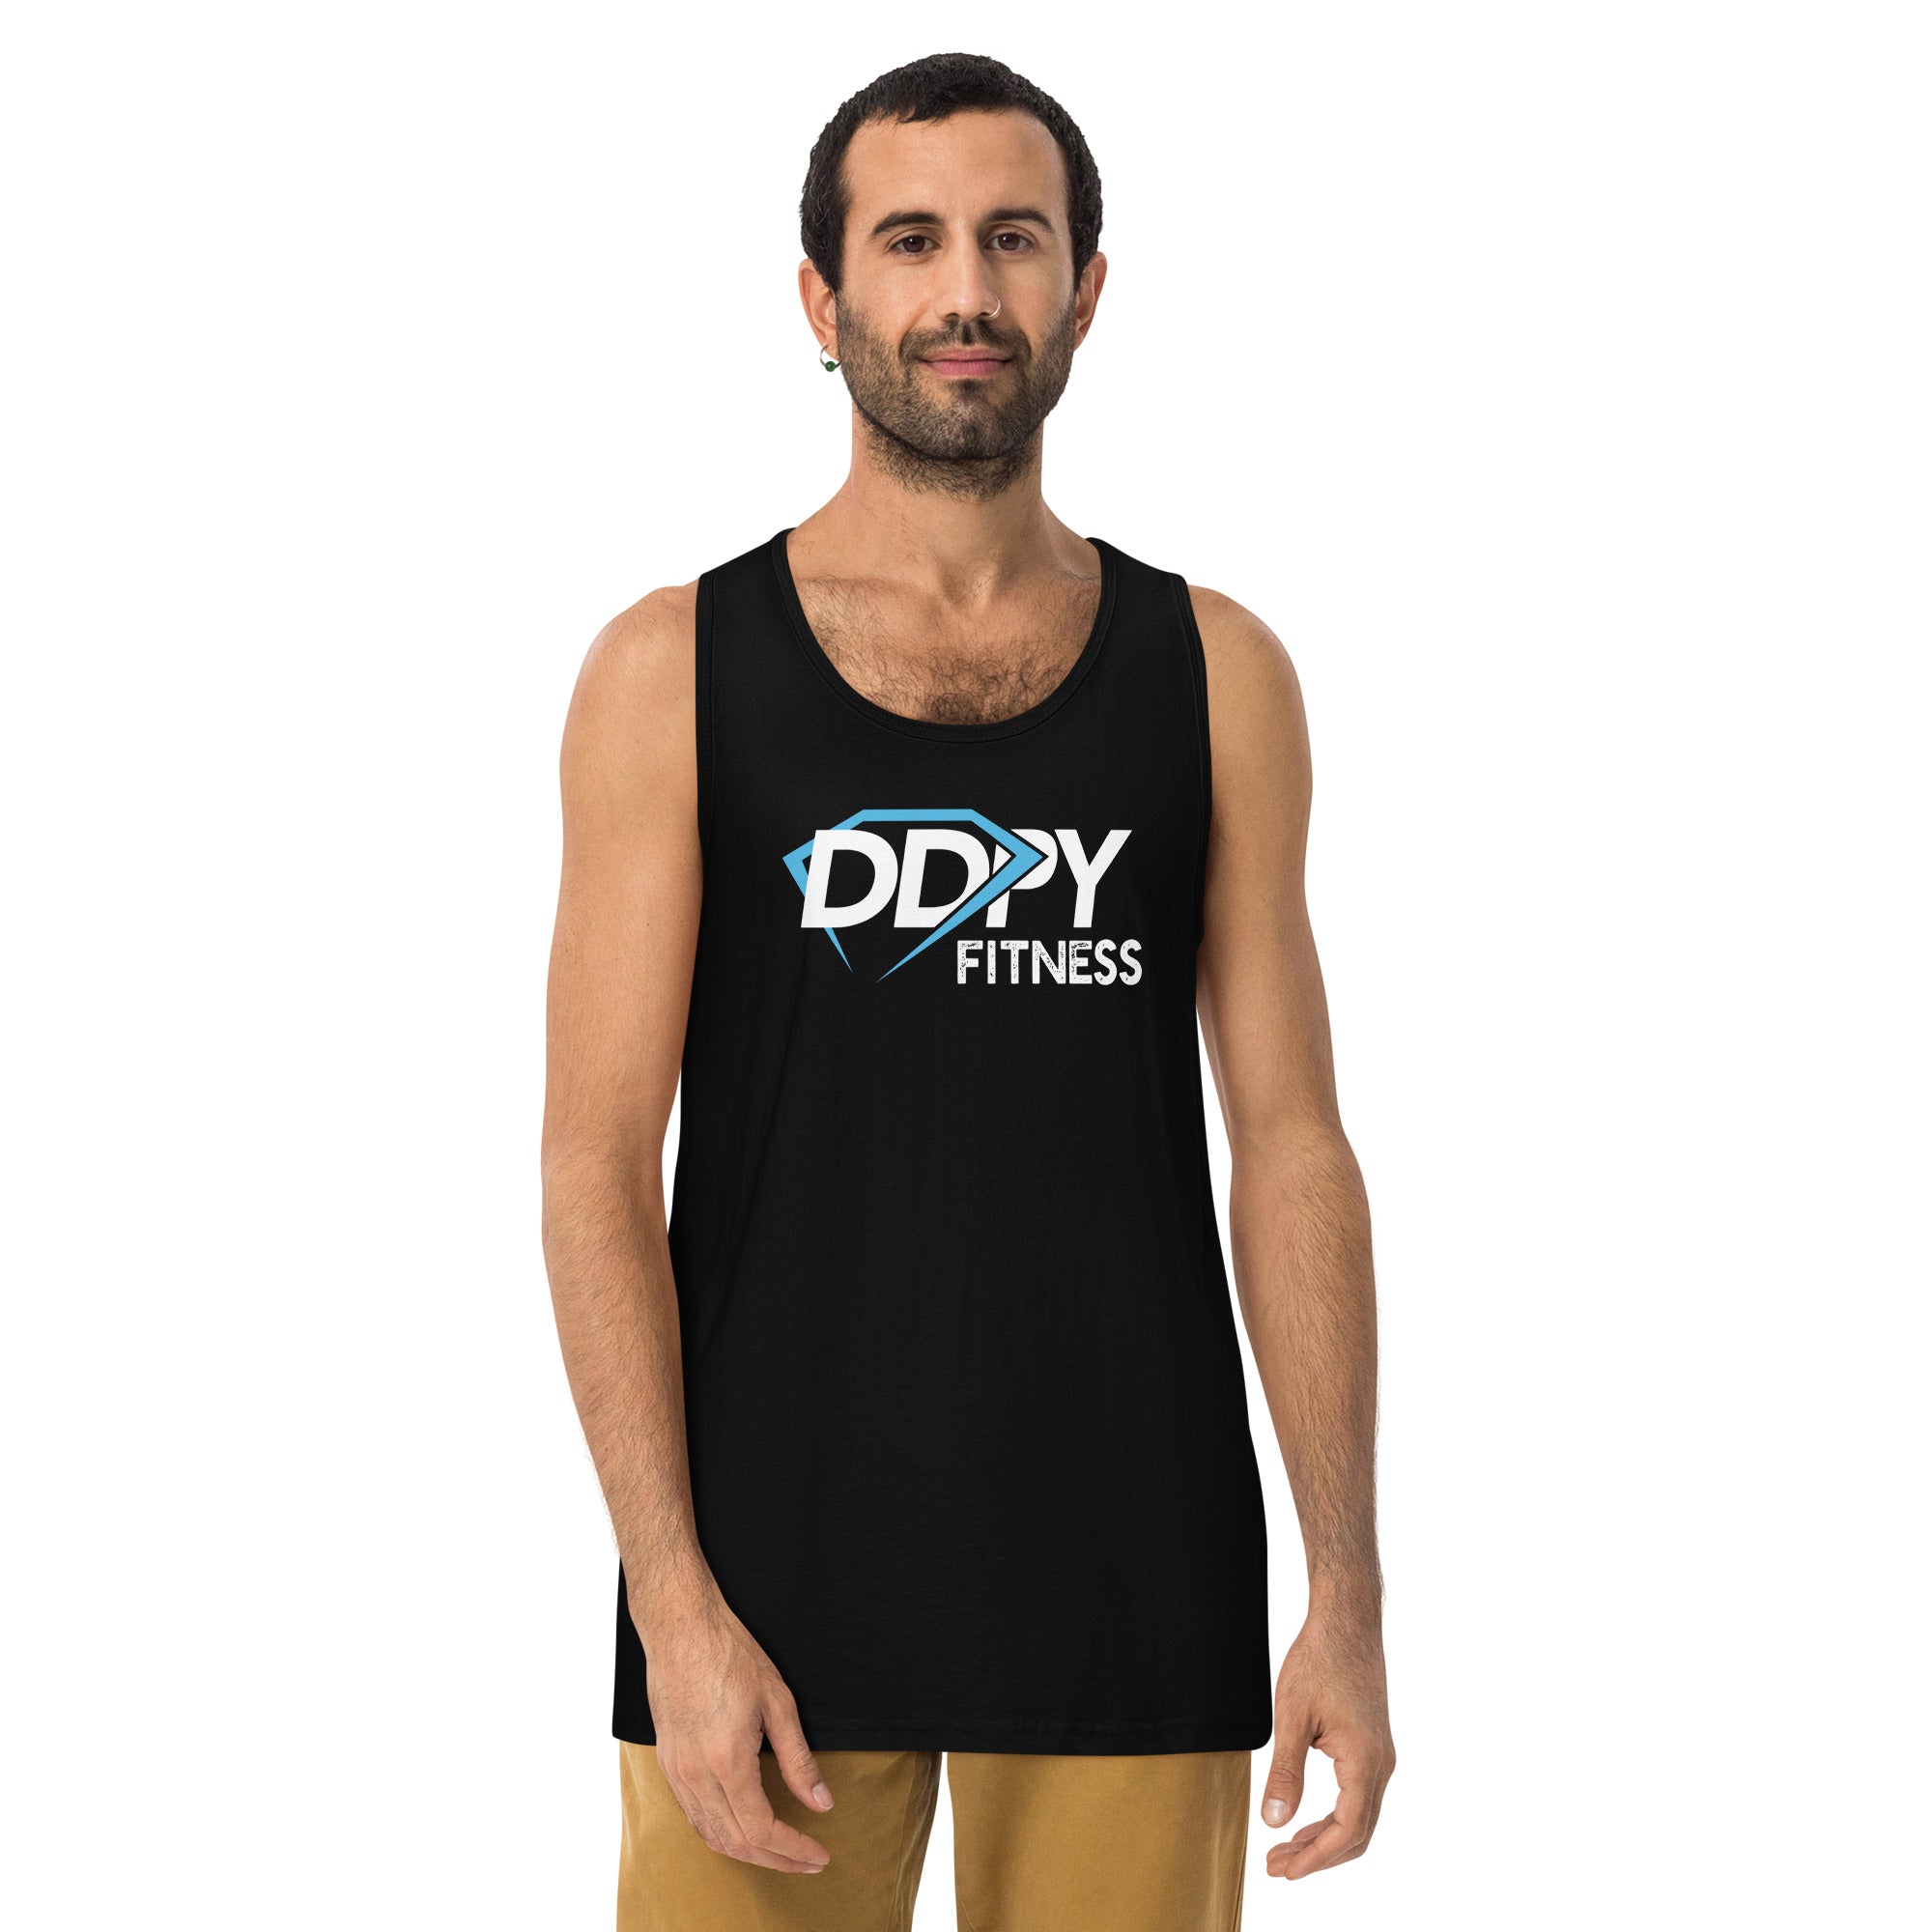 DDPY Fitness Tank (On Demand Printing)